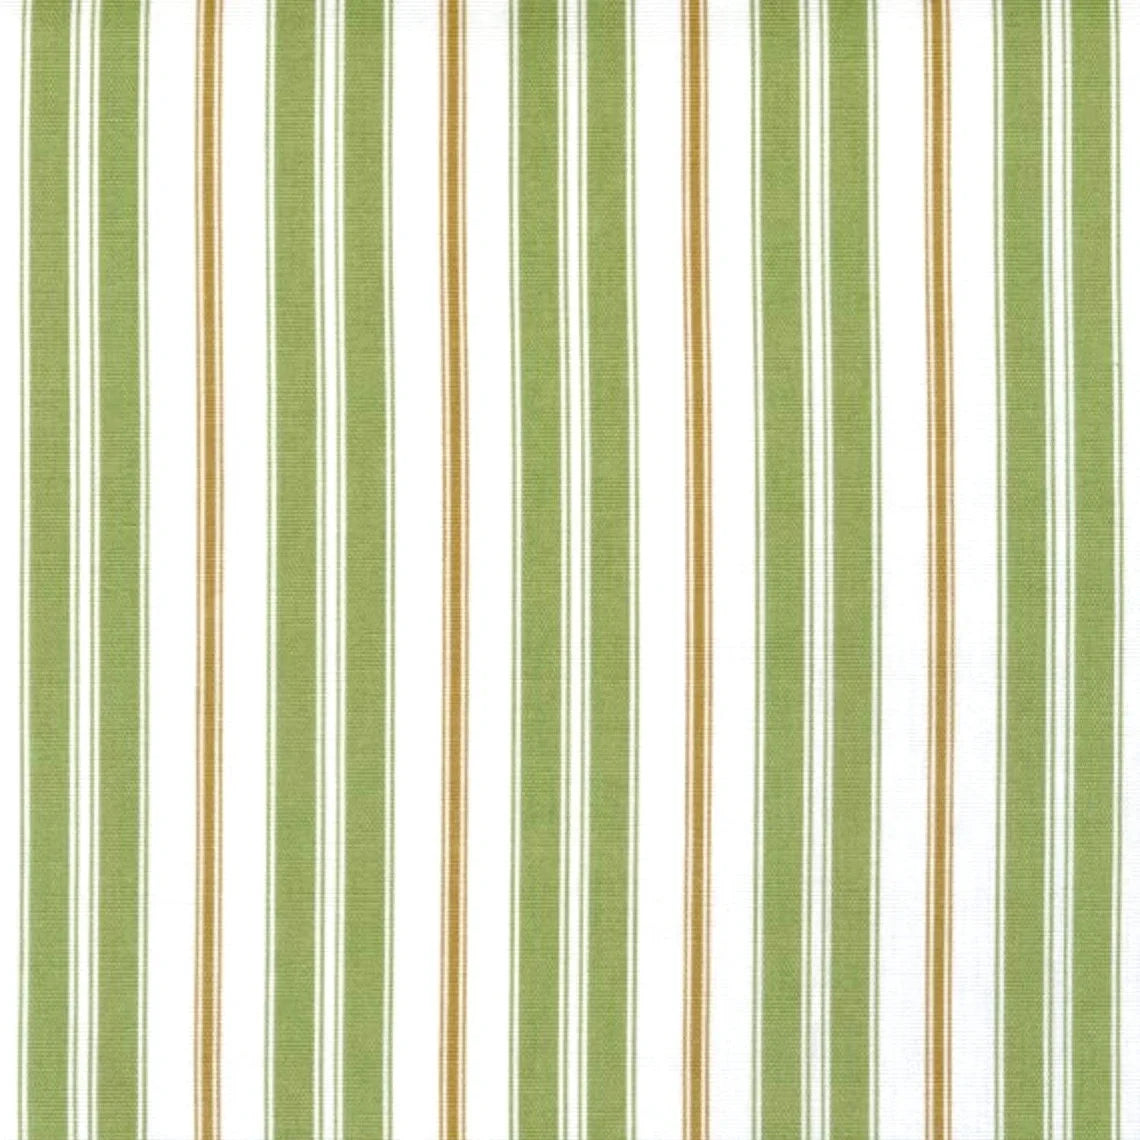 pillow sham in newbury aloe green stripe- green, brown, white